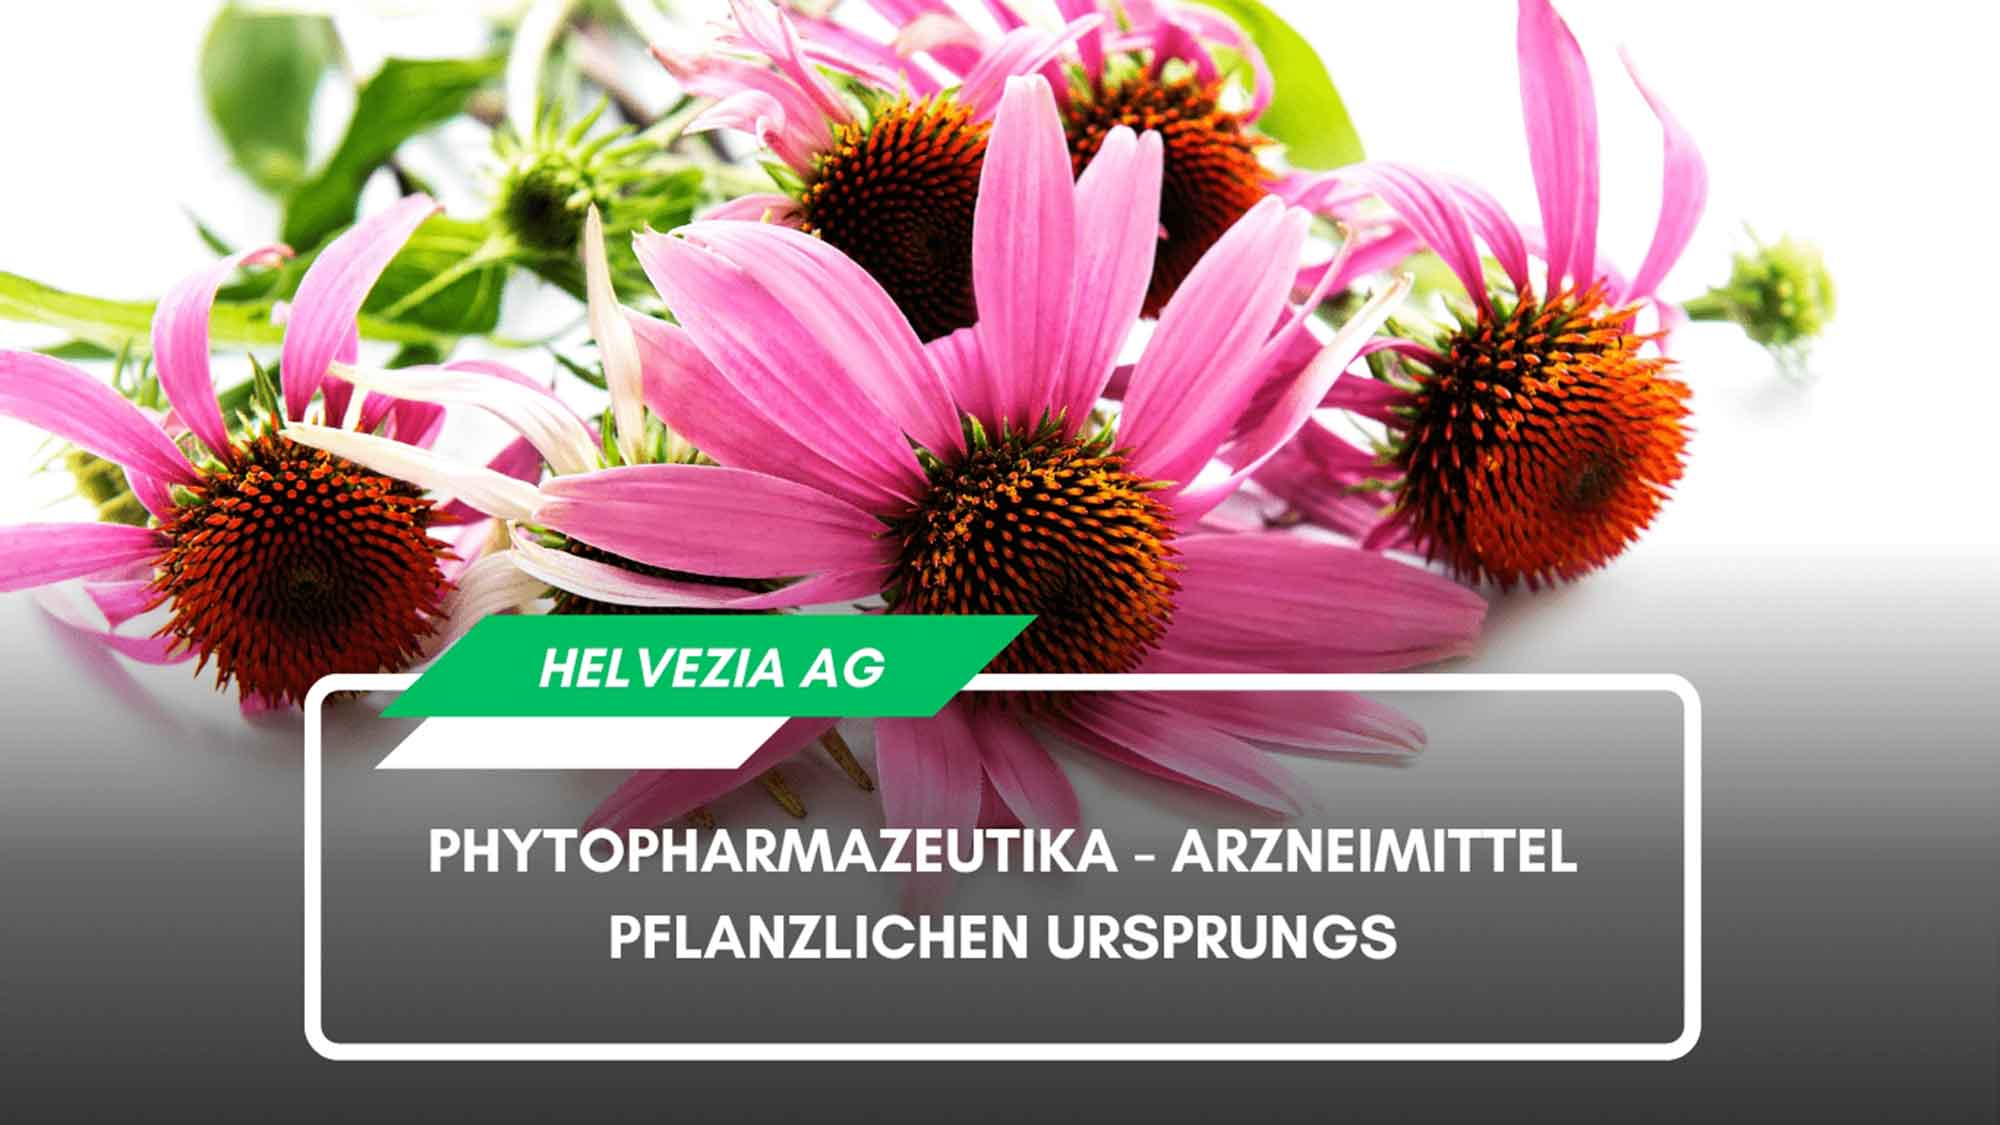 Helvezia AG: Phytopharmazeutika, Arzneimittel pflanzlichen Ursprungs